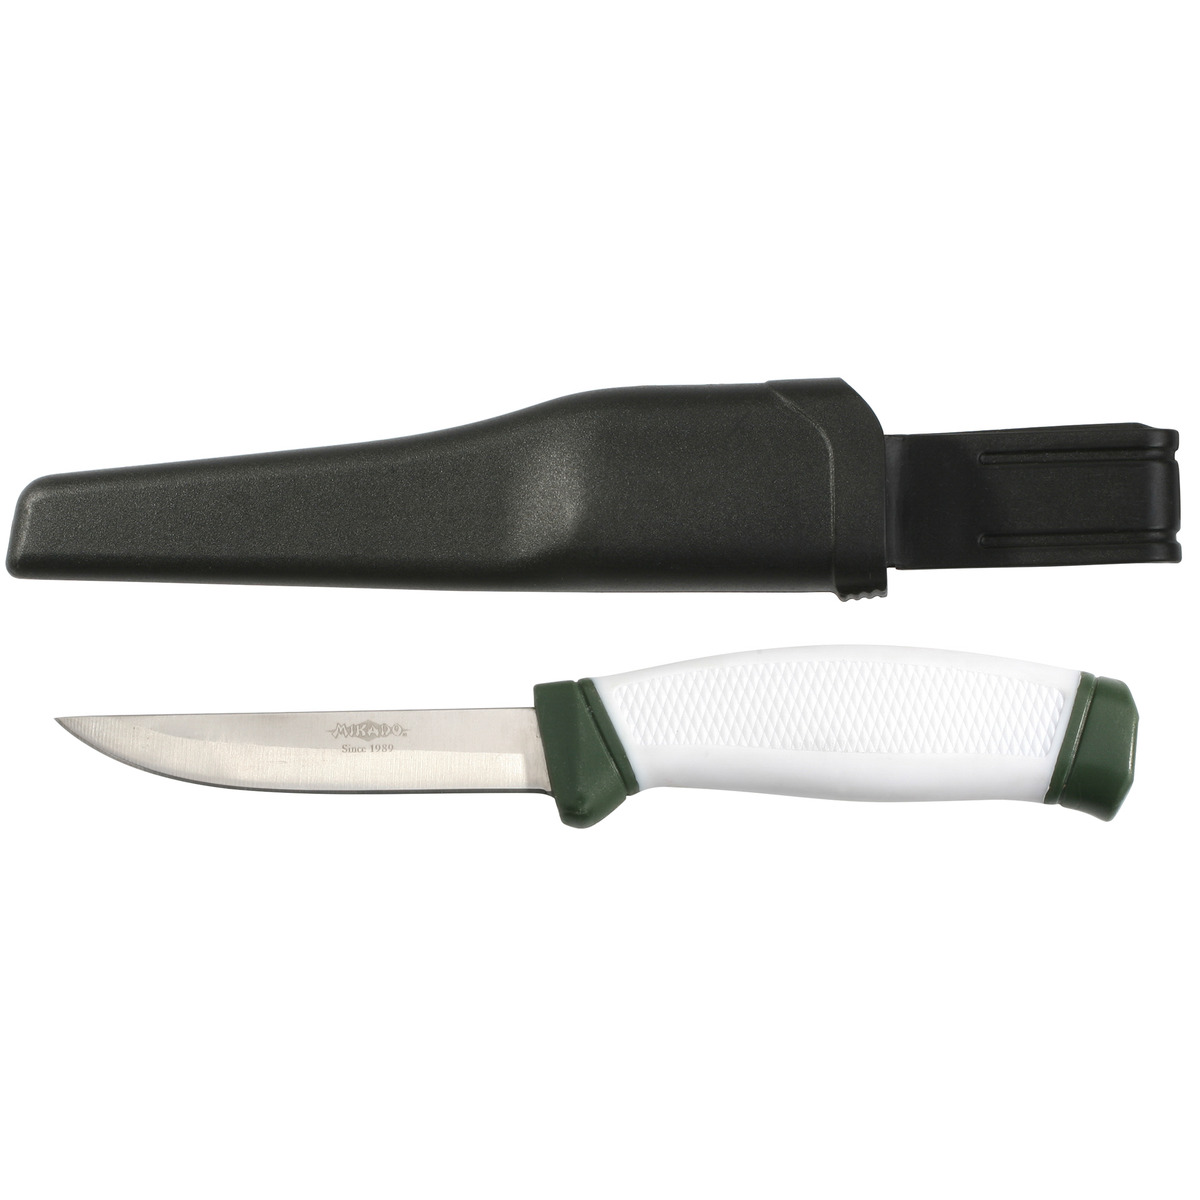 Mikado Fishing Knife - 209 BLADE 3.7 INCH